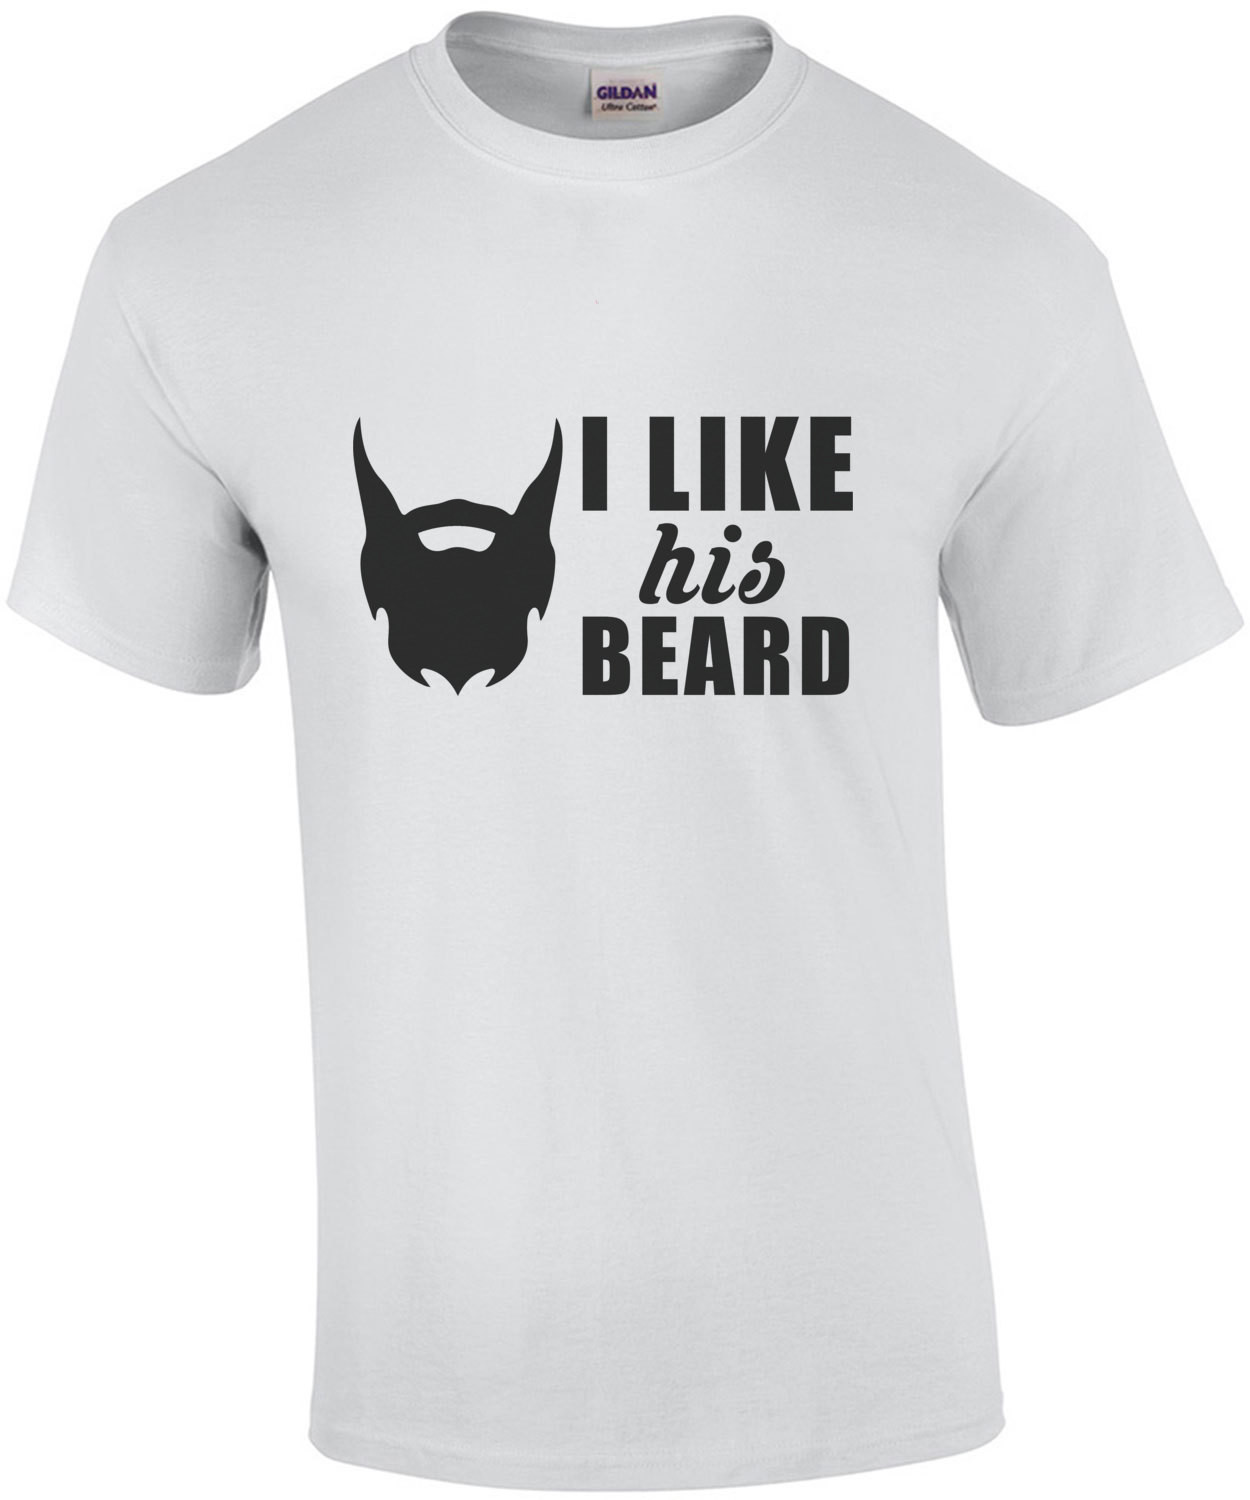 I like his beard - couple's t-shirt